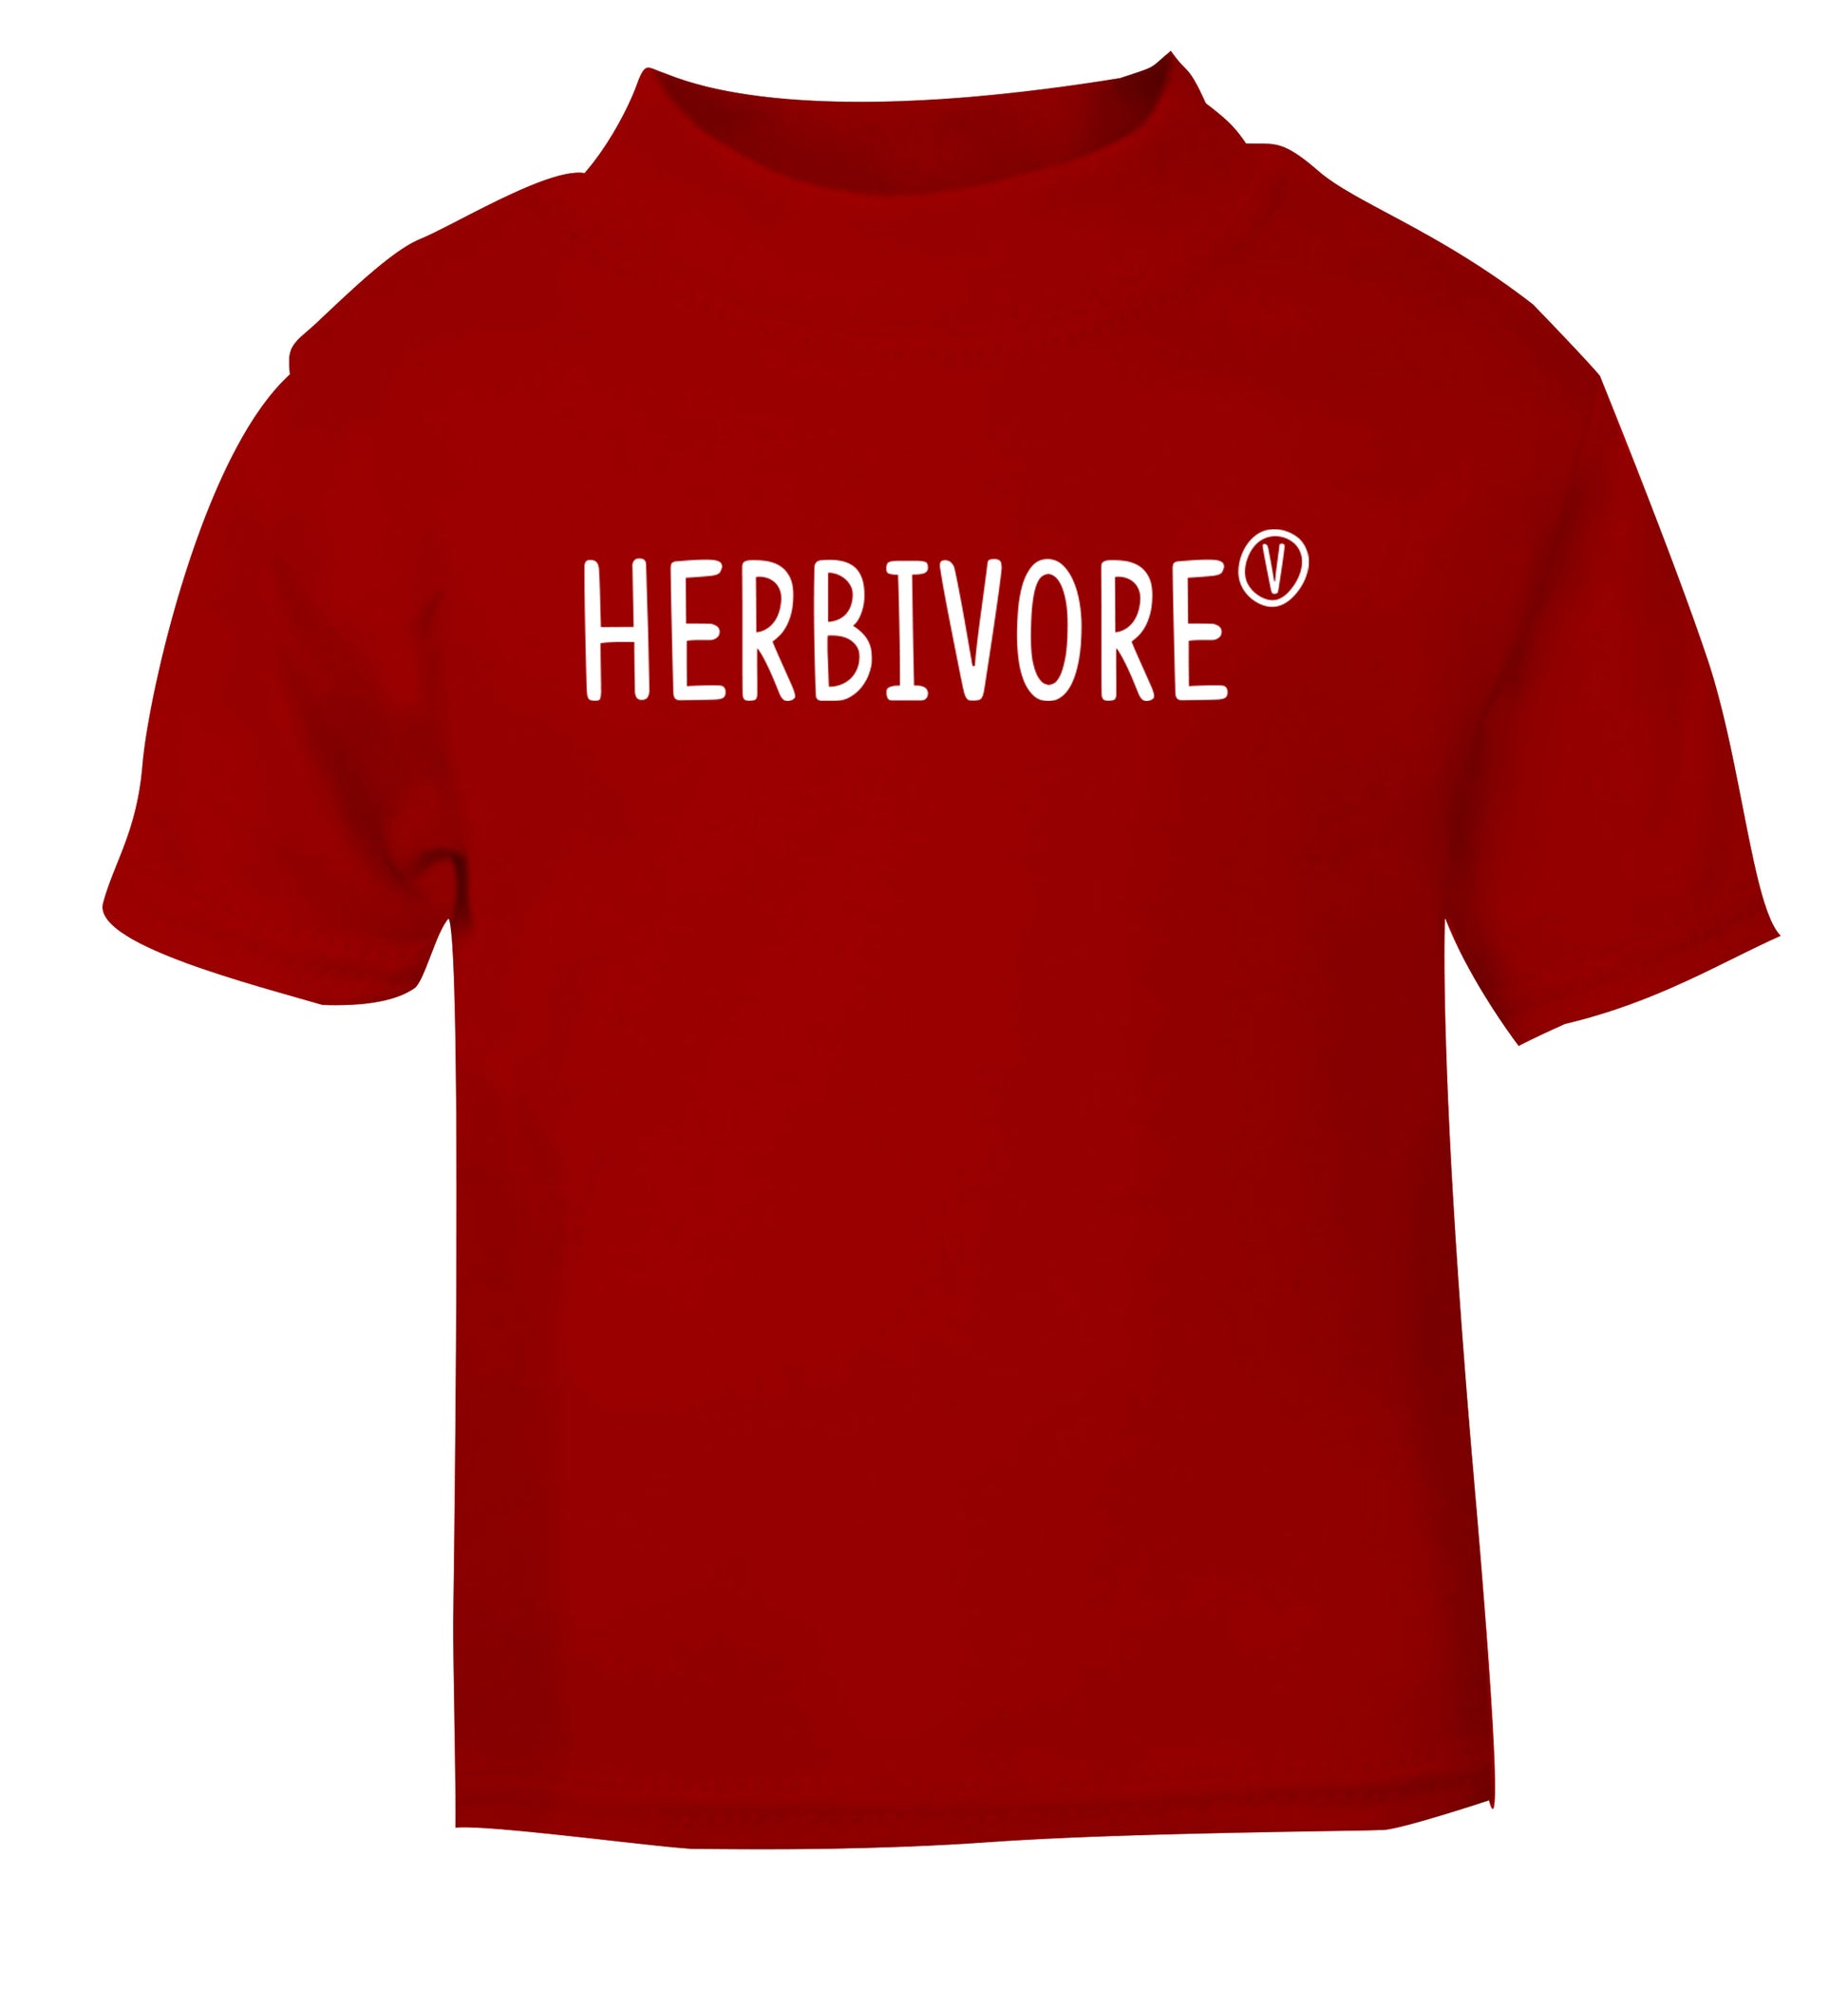 Herbivore red Baby Toddler Tshirt 2 Years